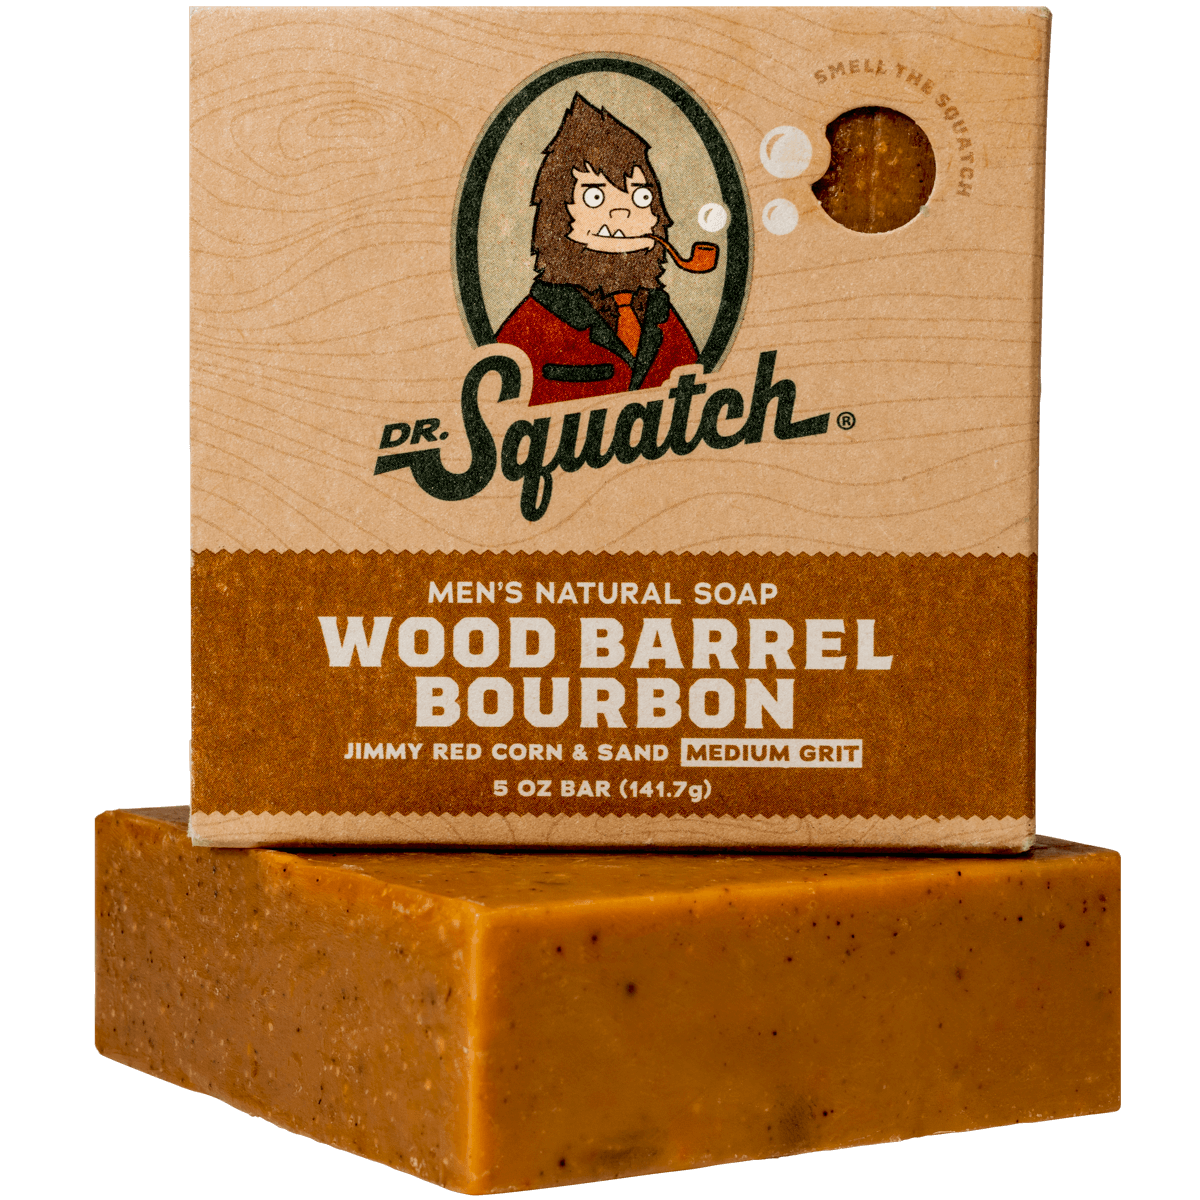 Wood Barrel Bourbon Dr Squatch 5 Bars For $18 NO BOX - Depop